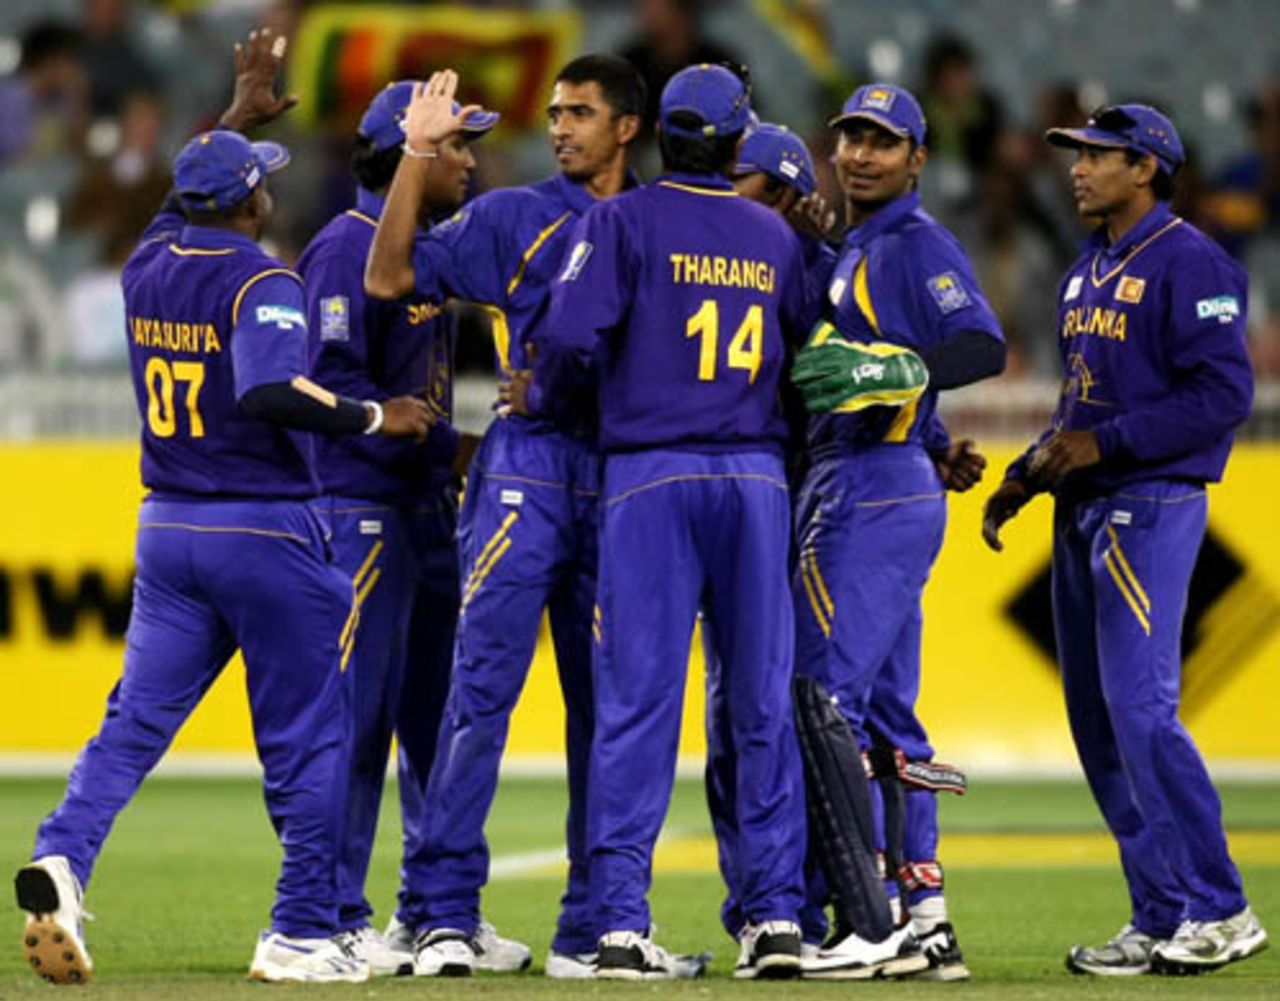 Ishara Amerasinghe is congratulated on the wicket of Mitchell Johnson, Australia v Sri Lanka, CB Series, 12th ODI, Melbourne, February 29, 2008 

